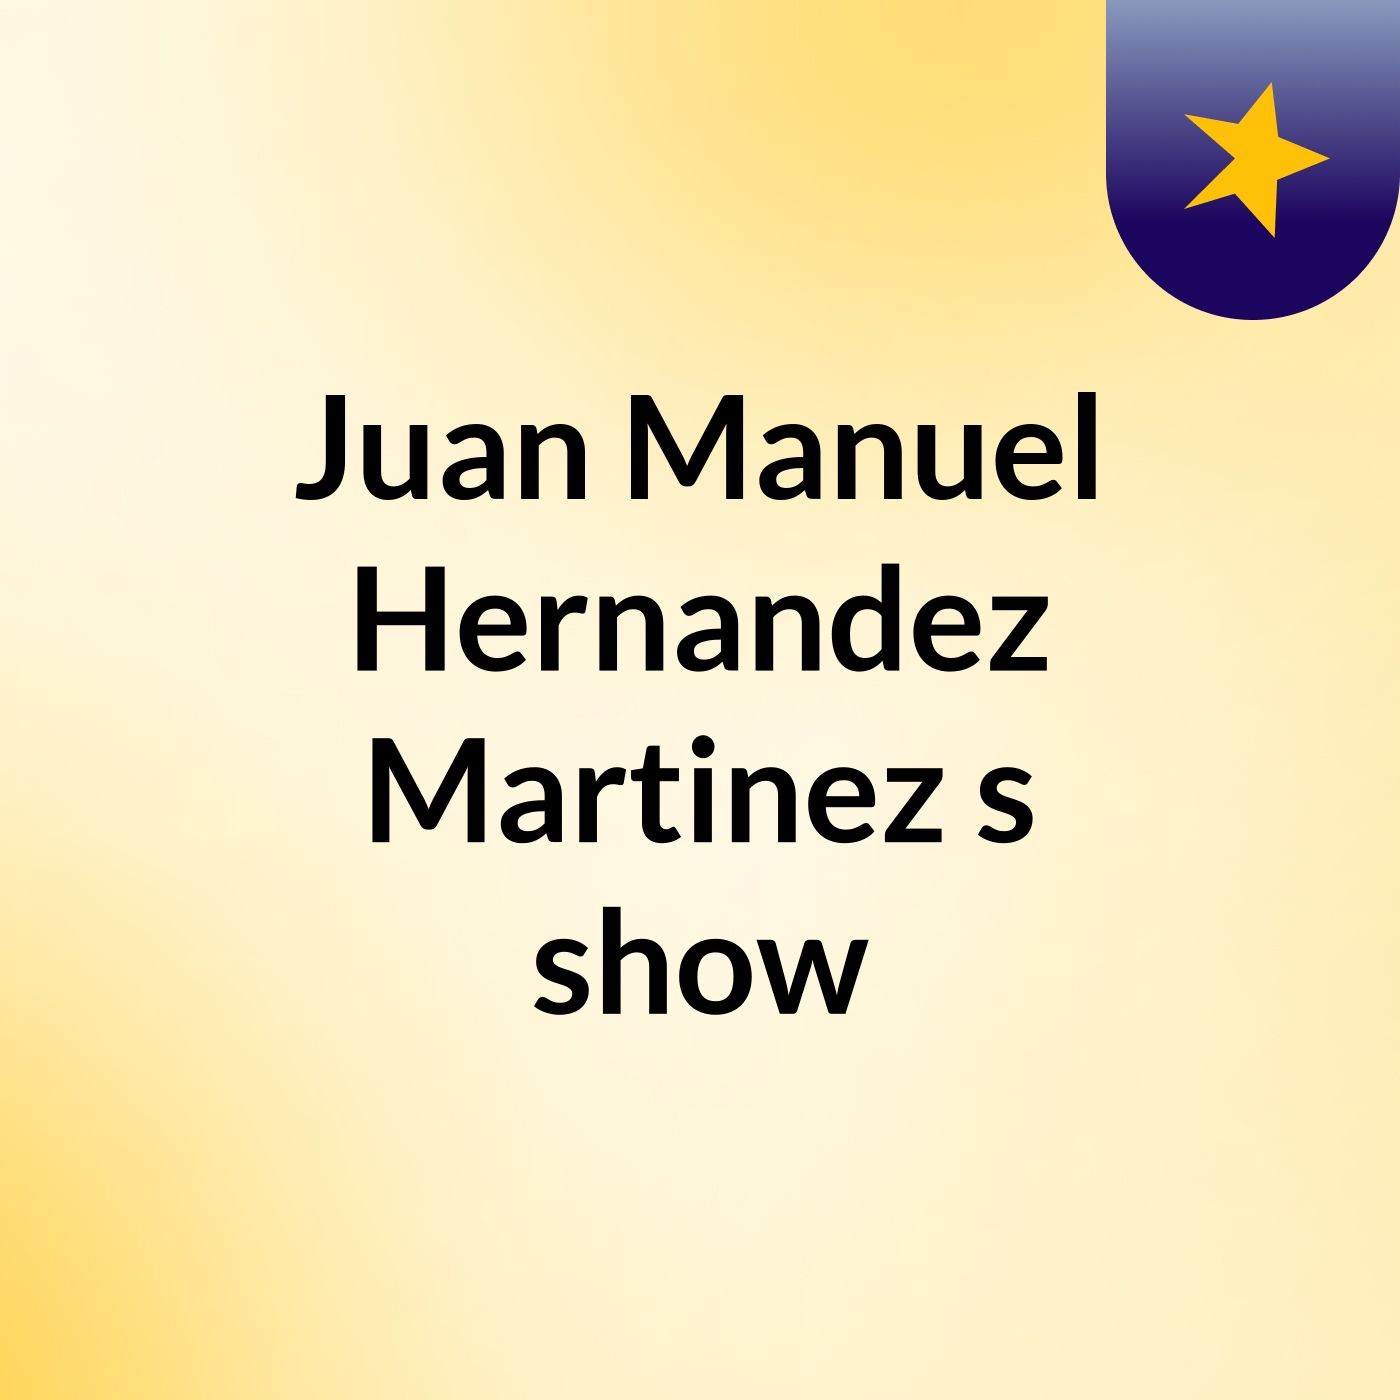 Juan Manuel Hernandez Martinez's show